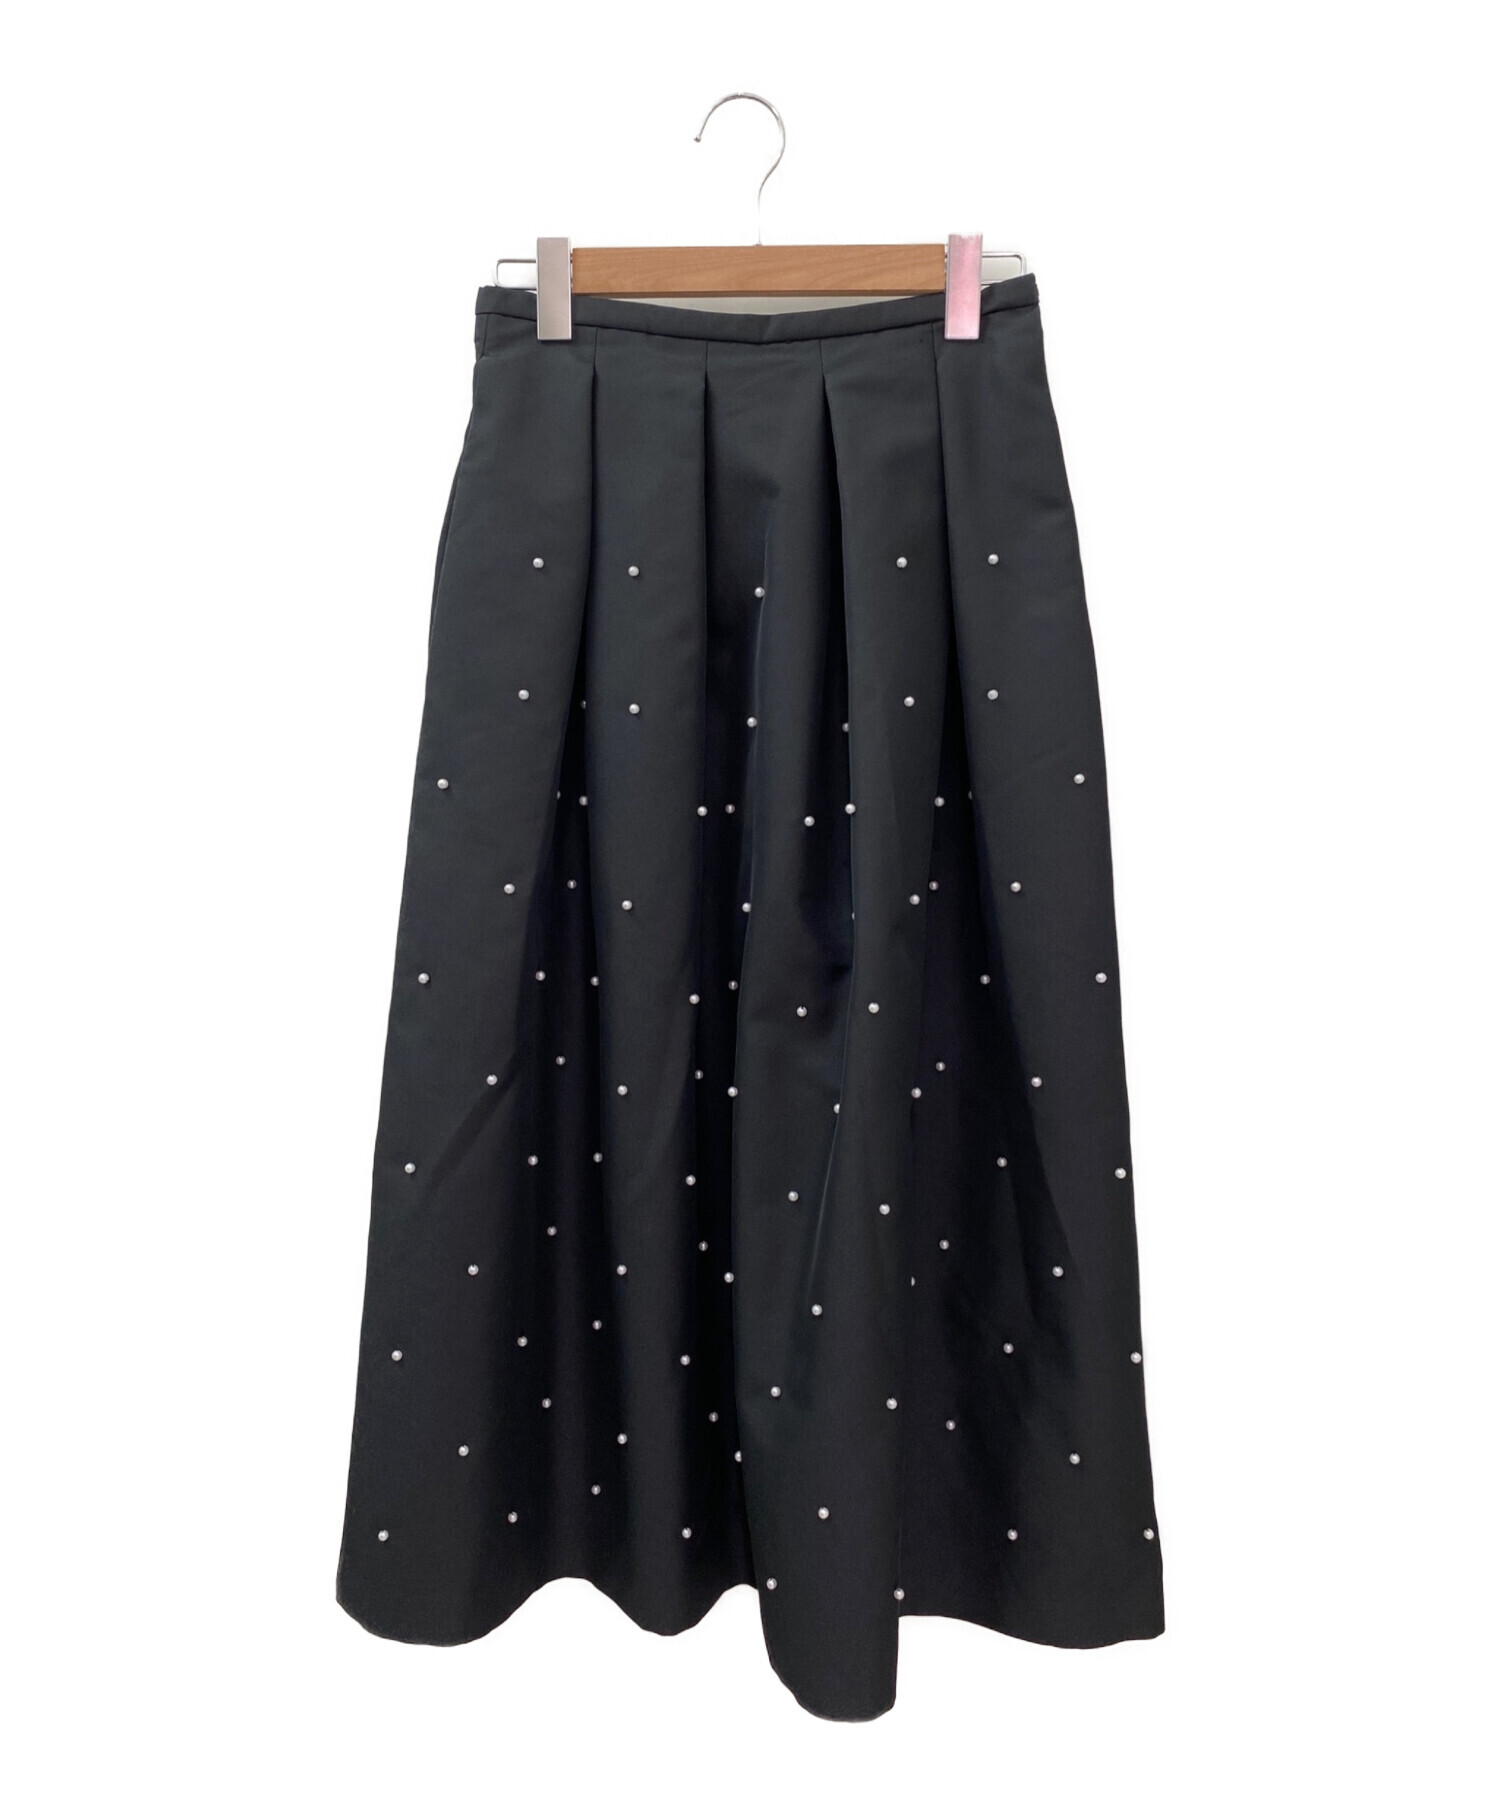 TSURU by MARIKO OIKAWA (ツルバイマリコオイカワ) confette パールスカート ブラック サイズ:36